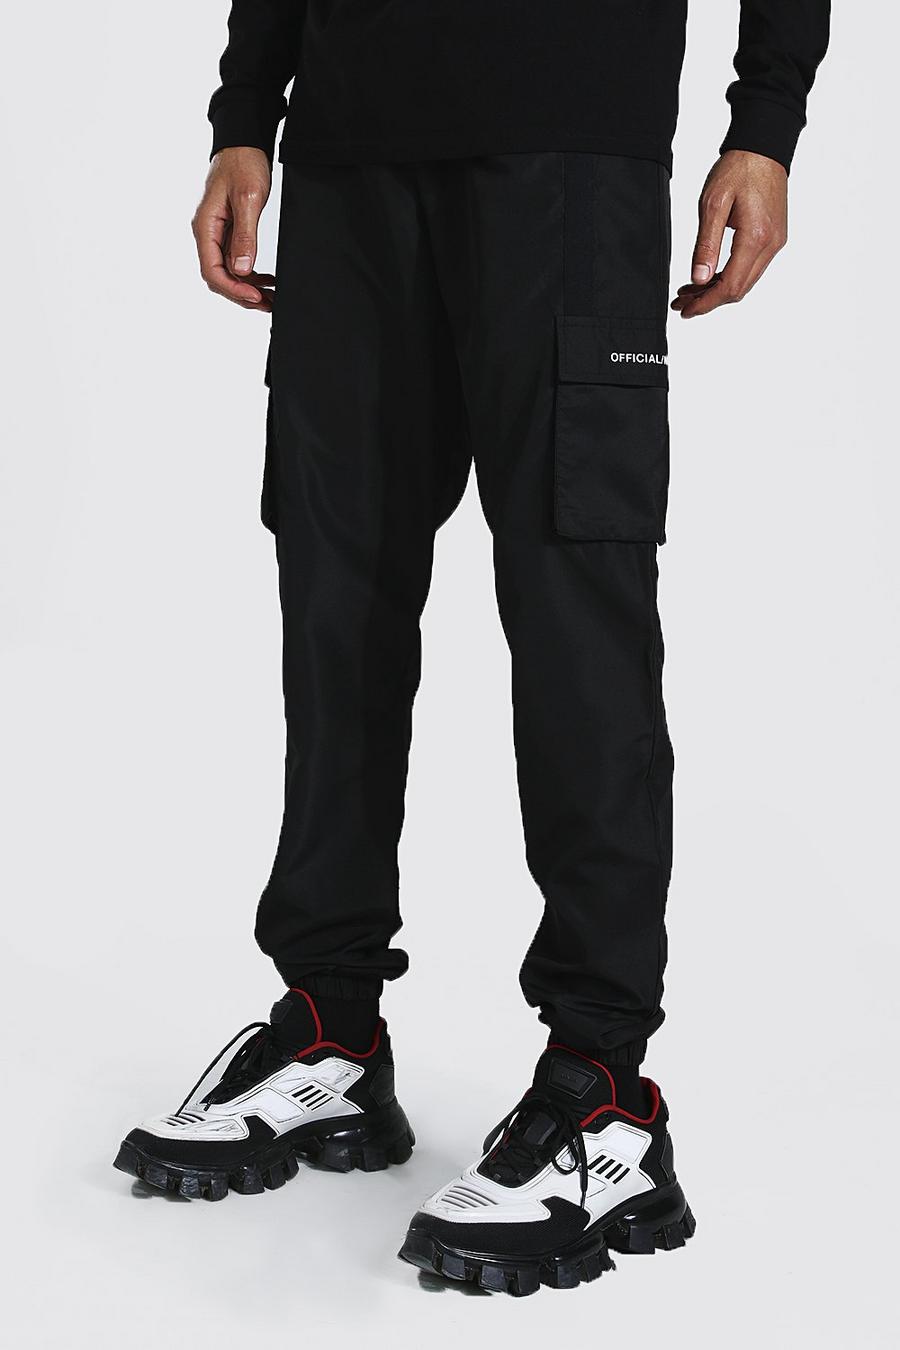 Pantalones de deporte de camuflaje y tejido shell 3D Official Man Tall, Negro image number 1